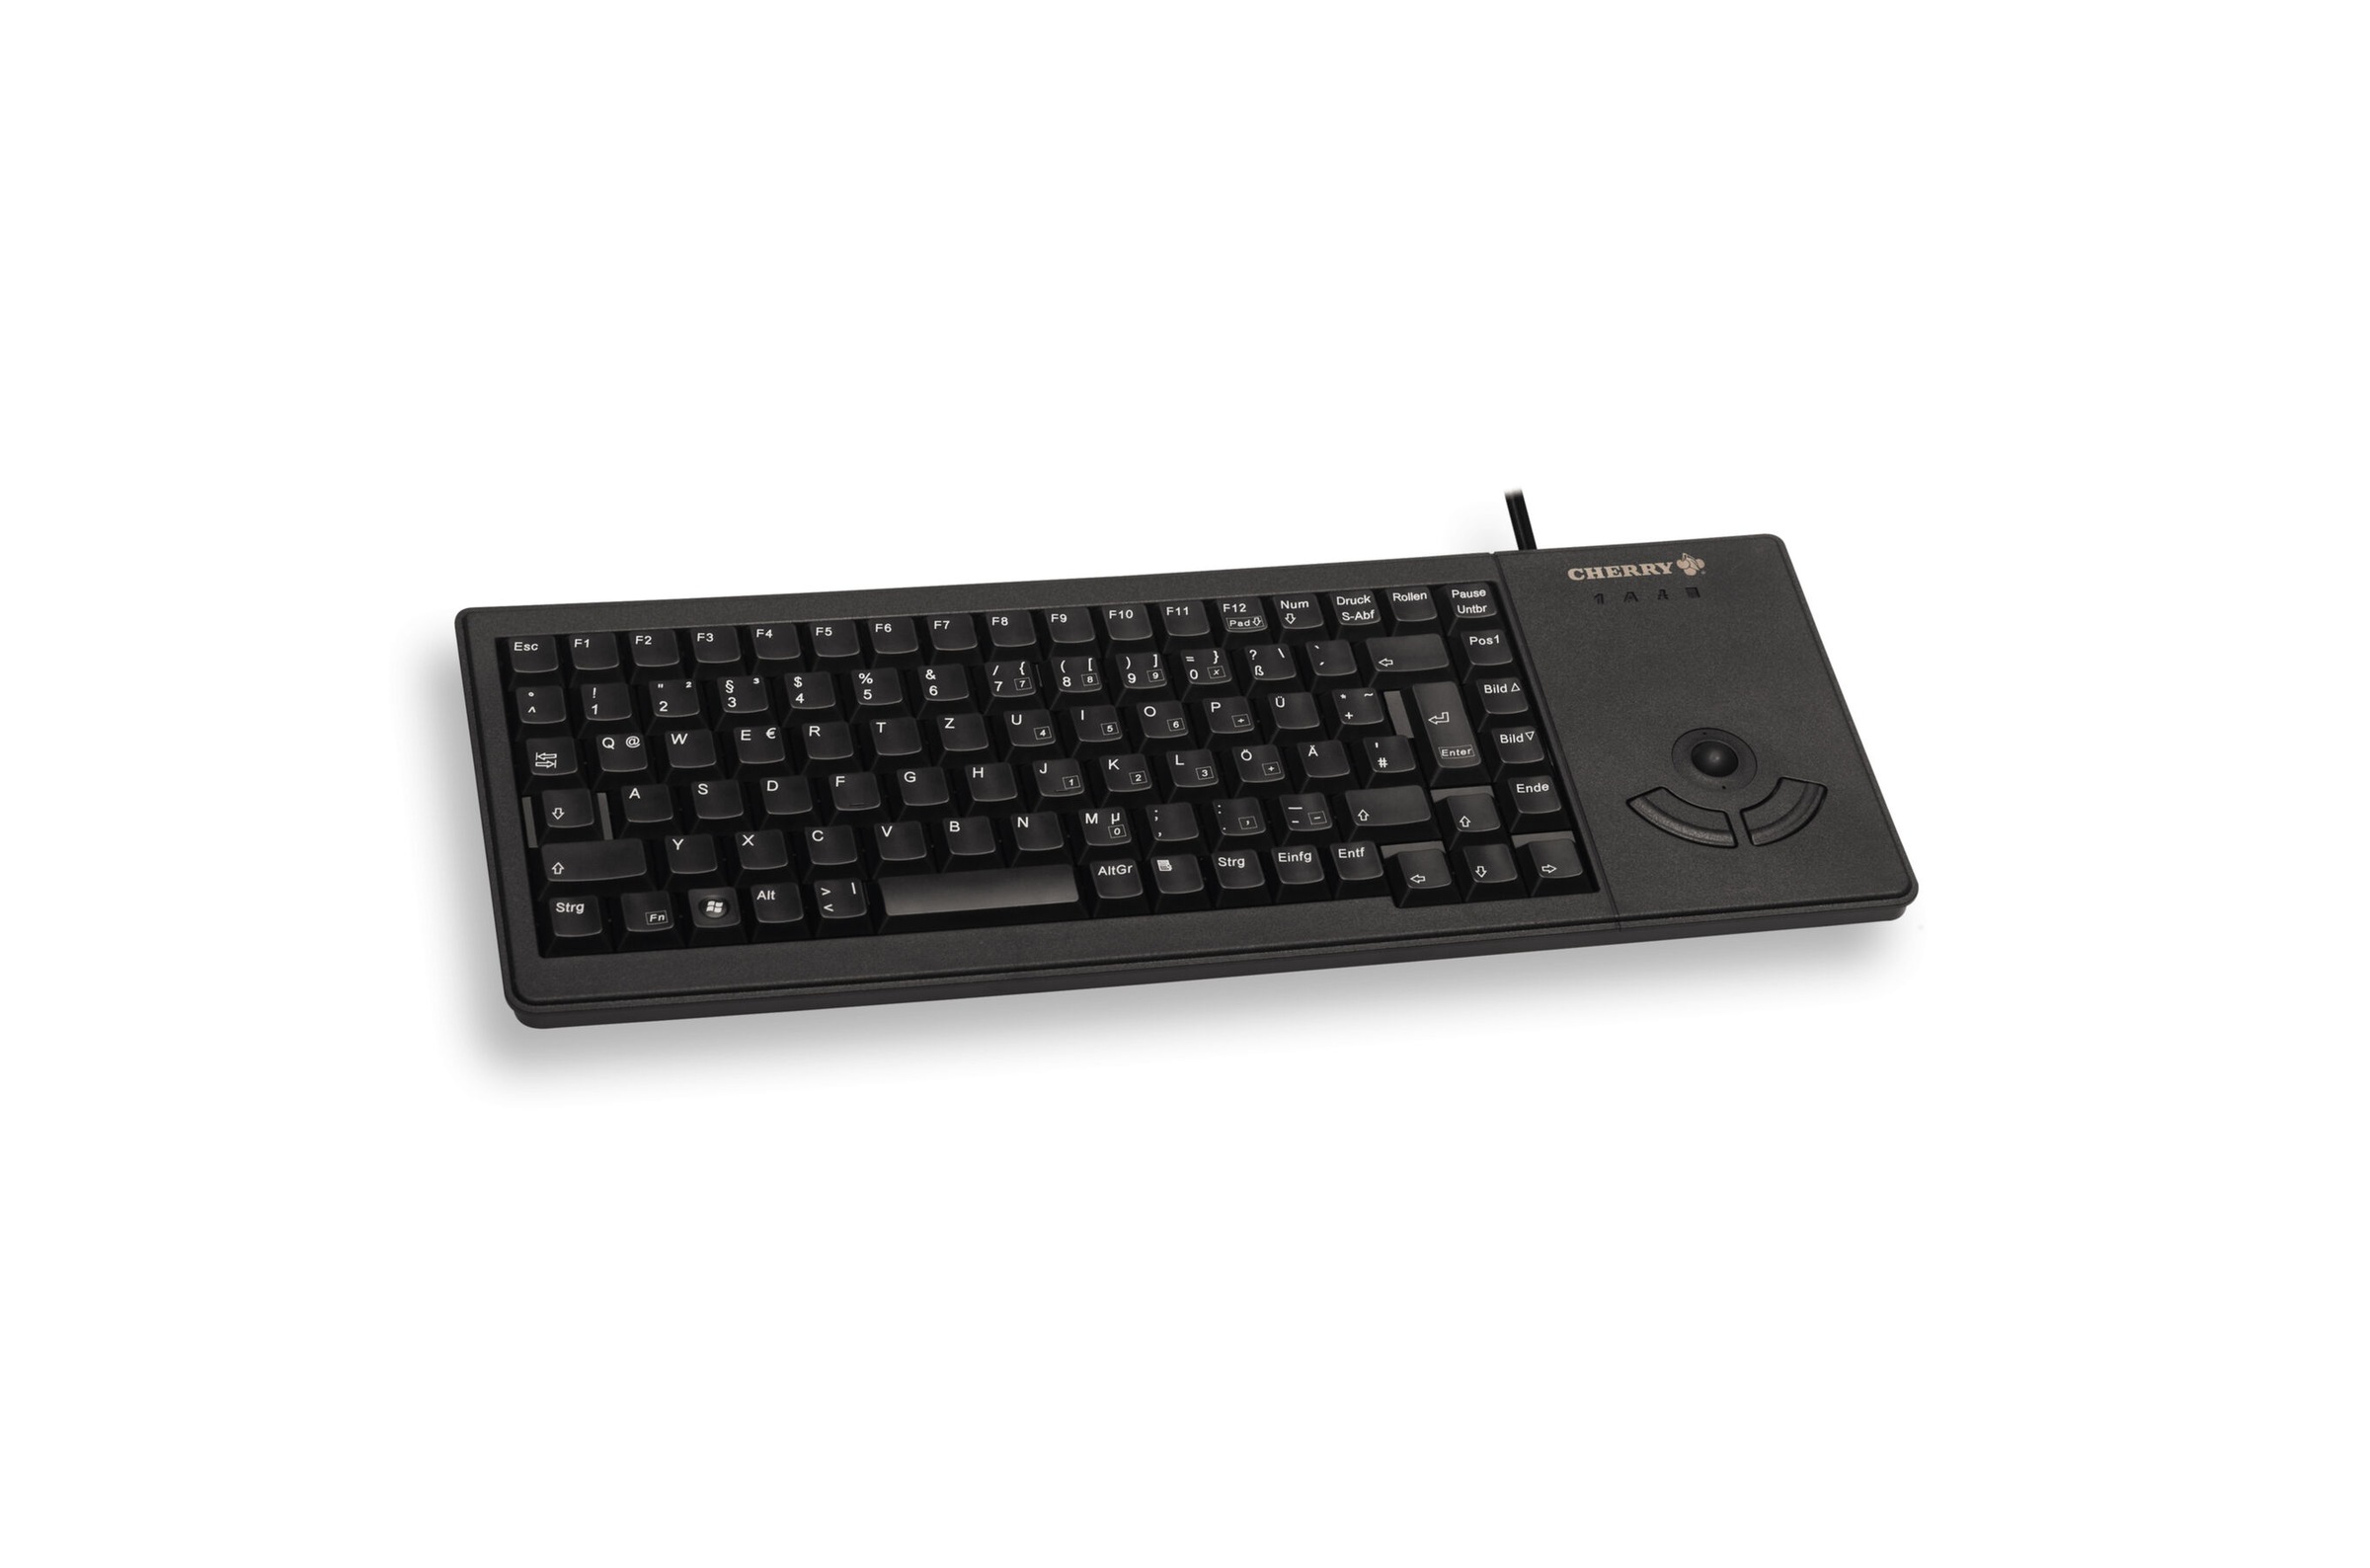 Cherry Tastatur »G84-5400 TRACKBALL Kabelgebundene Tastatur, USB, Schwarz«